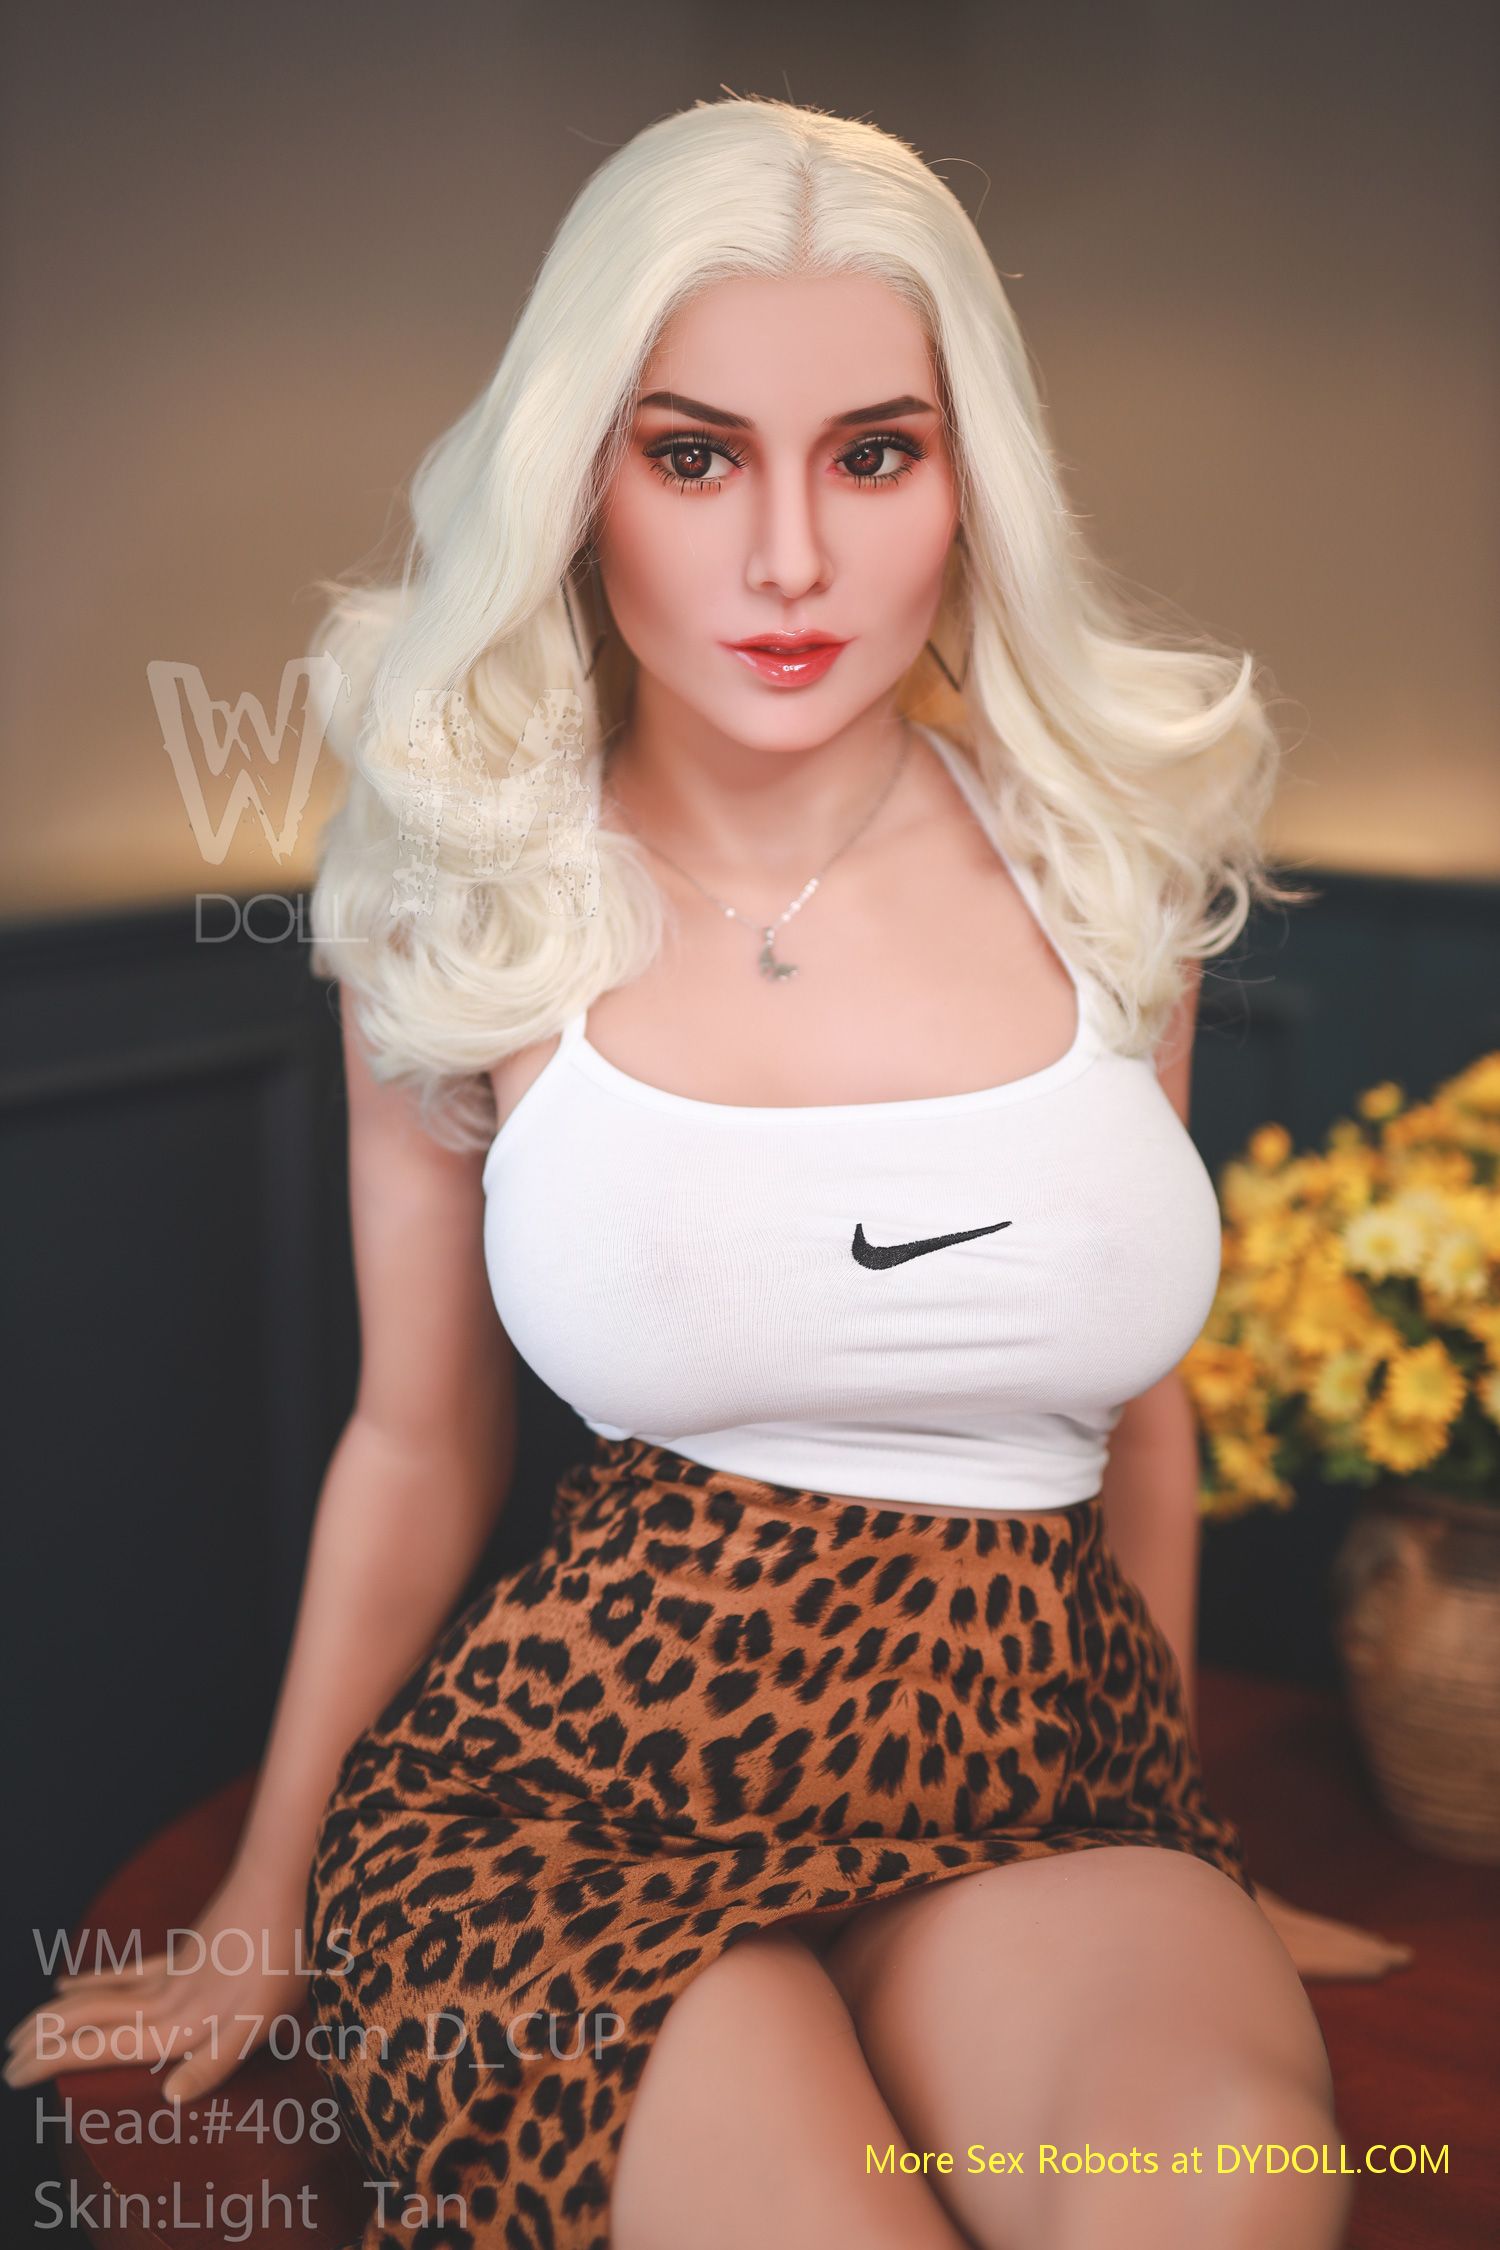 Blonde hot mature sex robot with big boobs